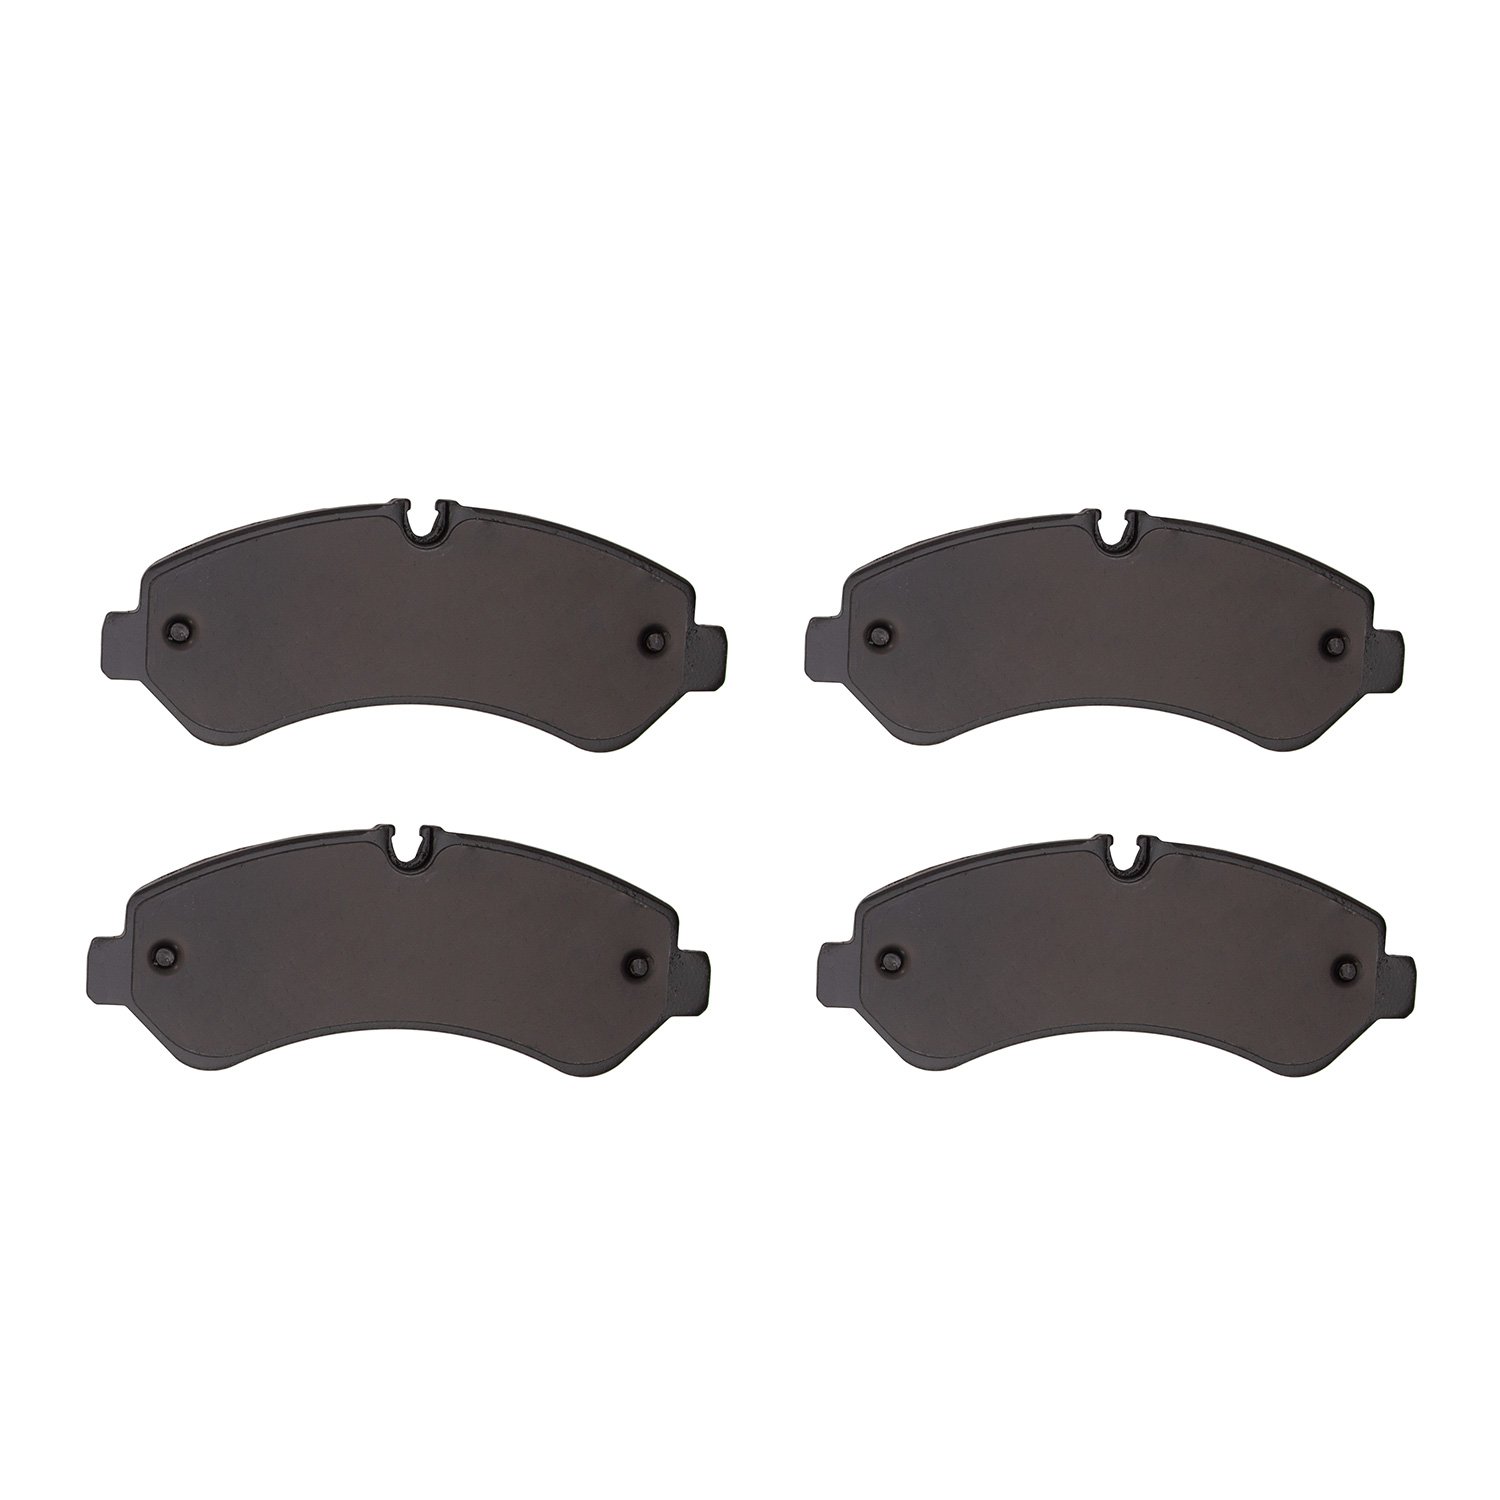 1551-2236-00 5000 Advanced Semi-Metallic Brake Pads, Fits Select Multiple Makes/Models, Position: Rear,Rr